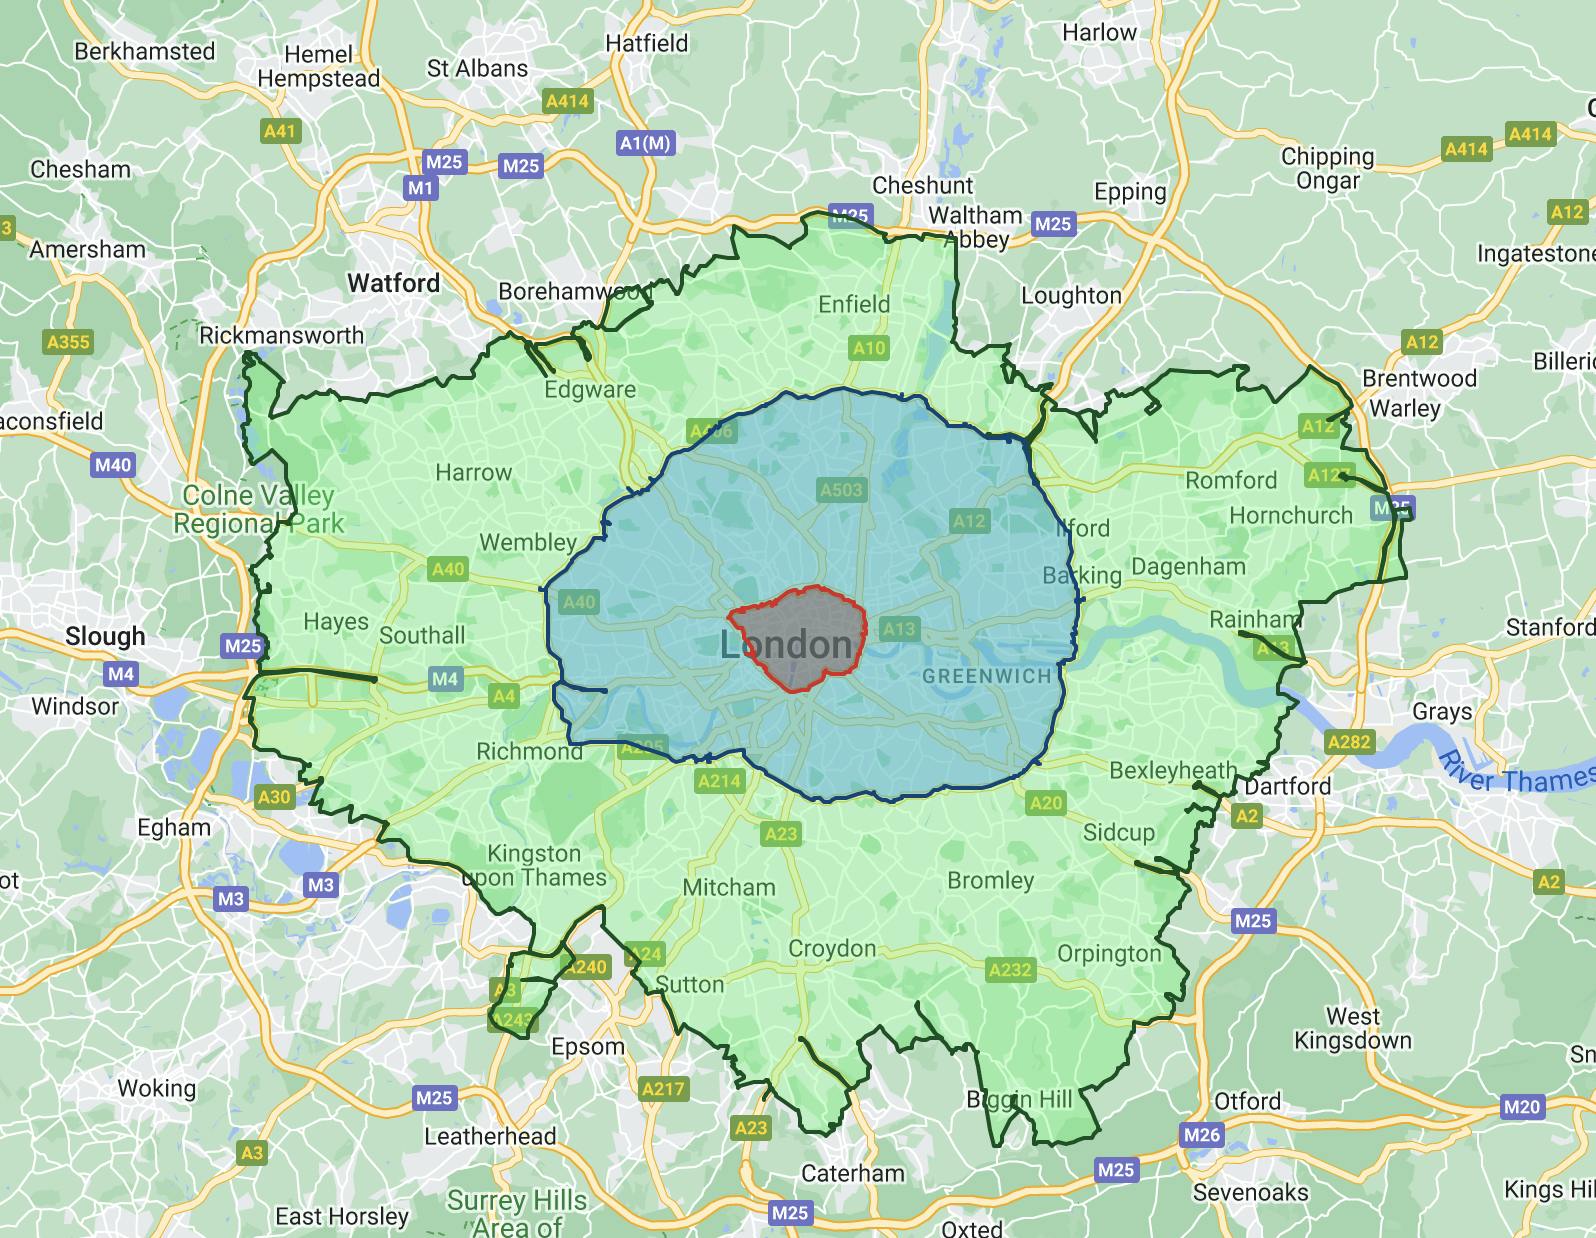 Combined London City Charges map including Congestion, ULEZ & LEZ